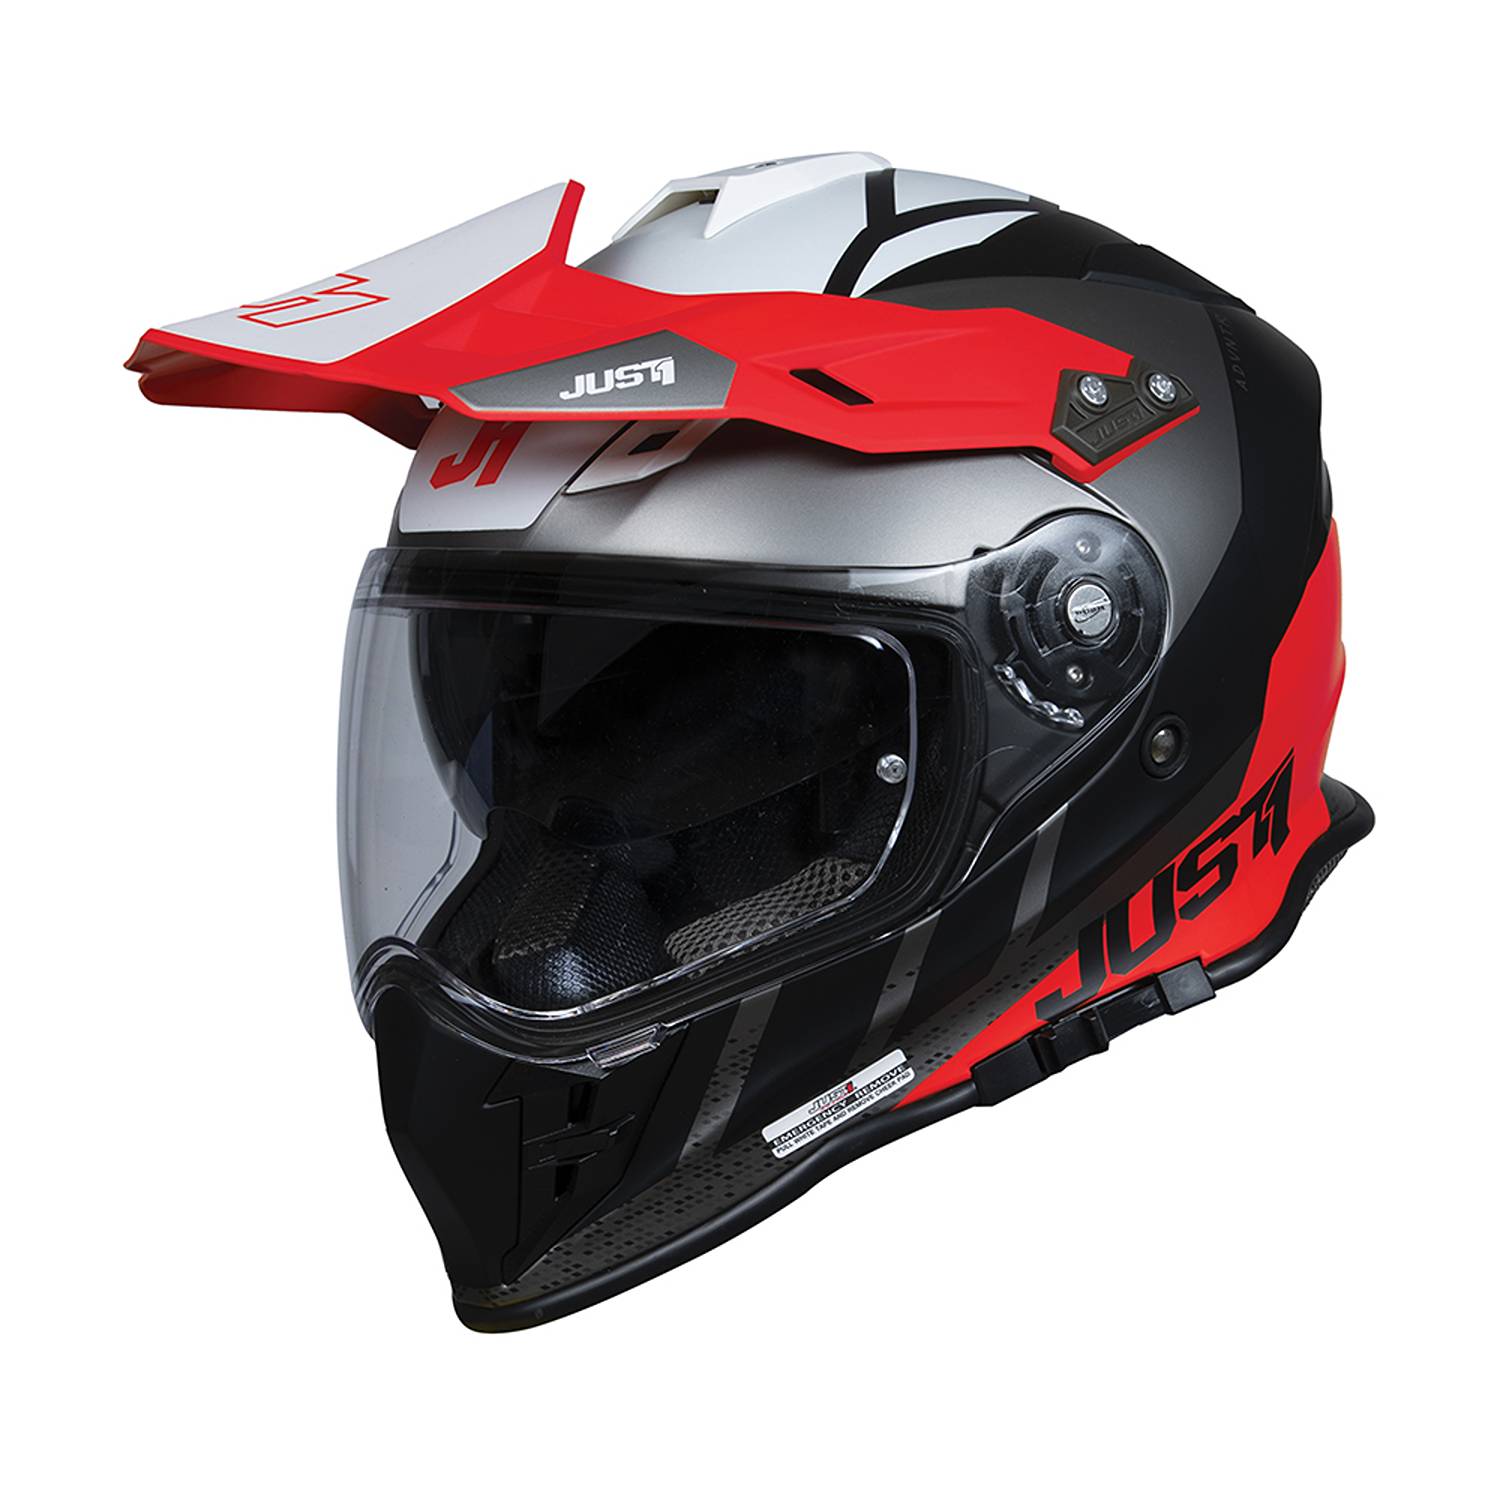 Just1 Helmet J34 Pro Outerspace Black Red White Adventure Helmet Size S